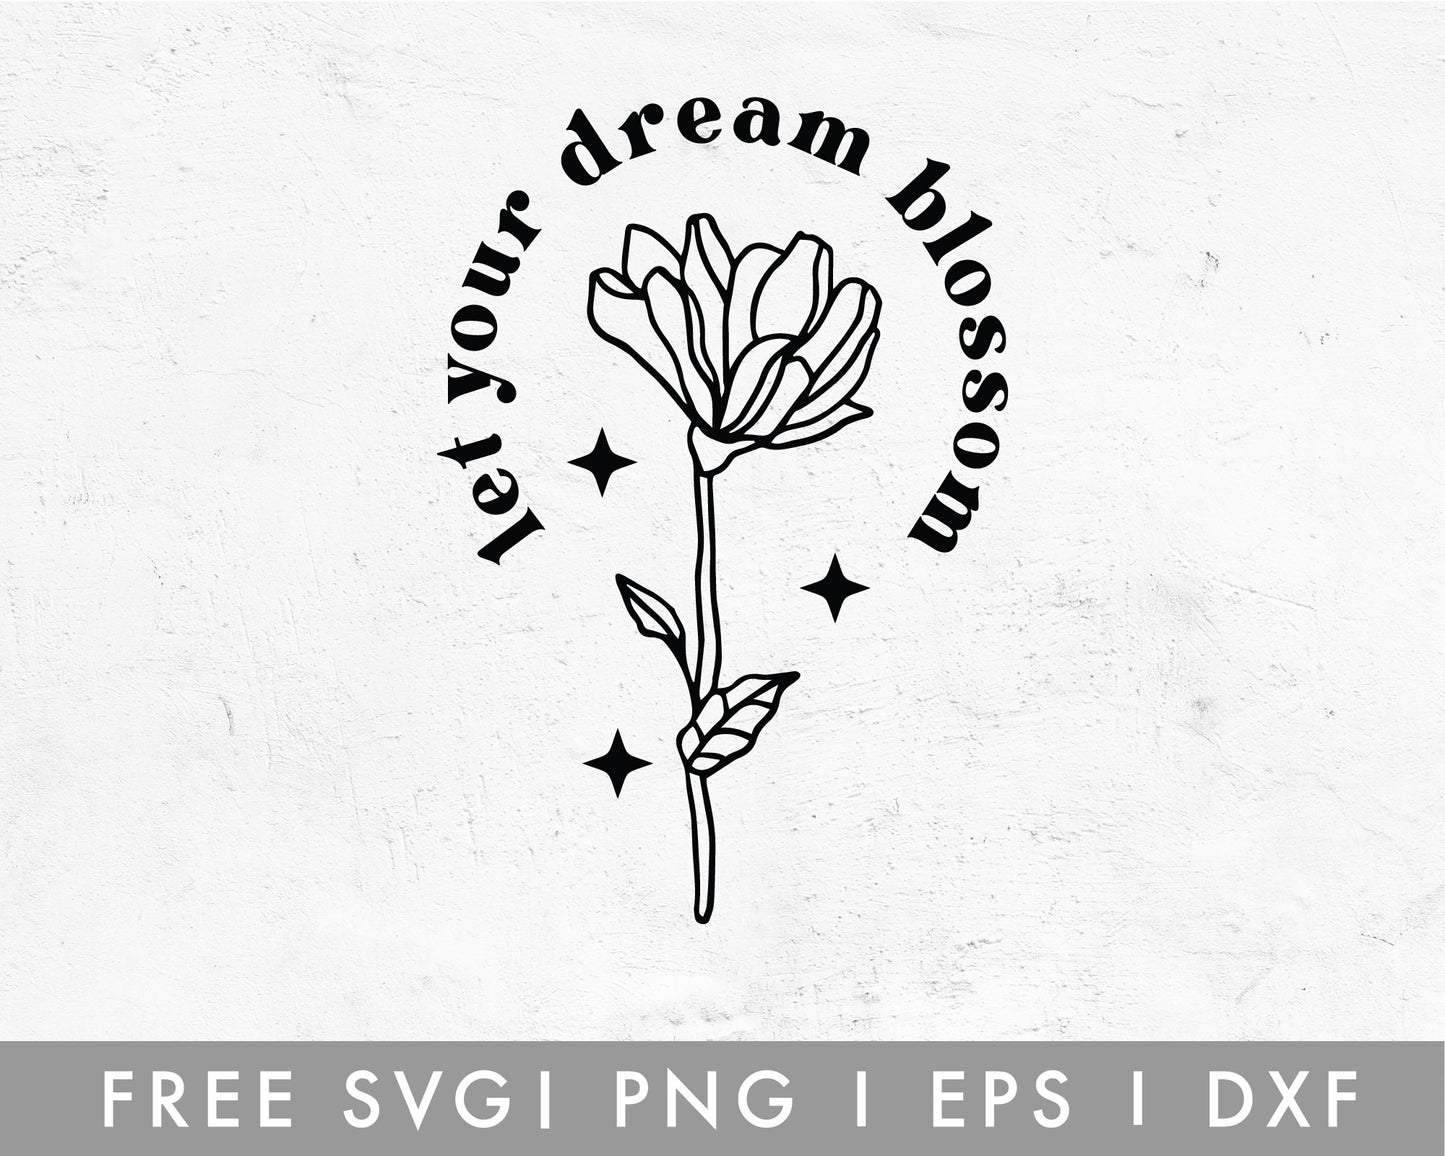 FREE Let Your Dream Blossom SVG